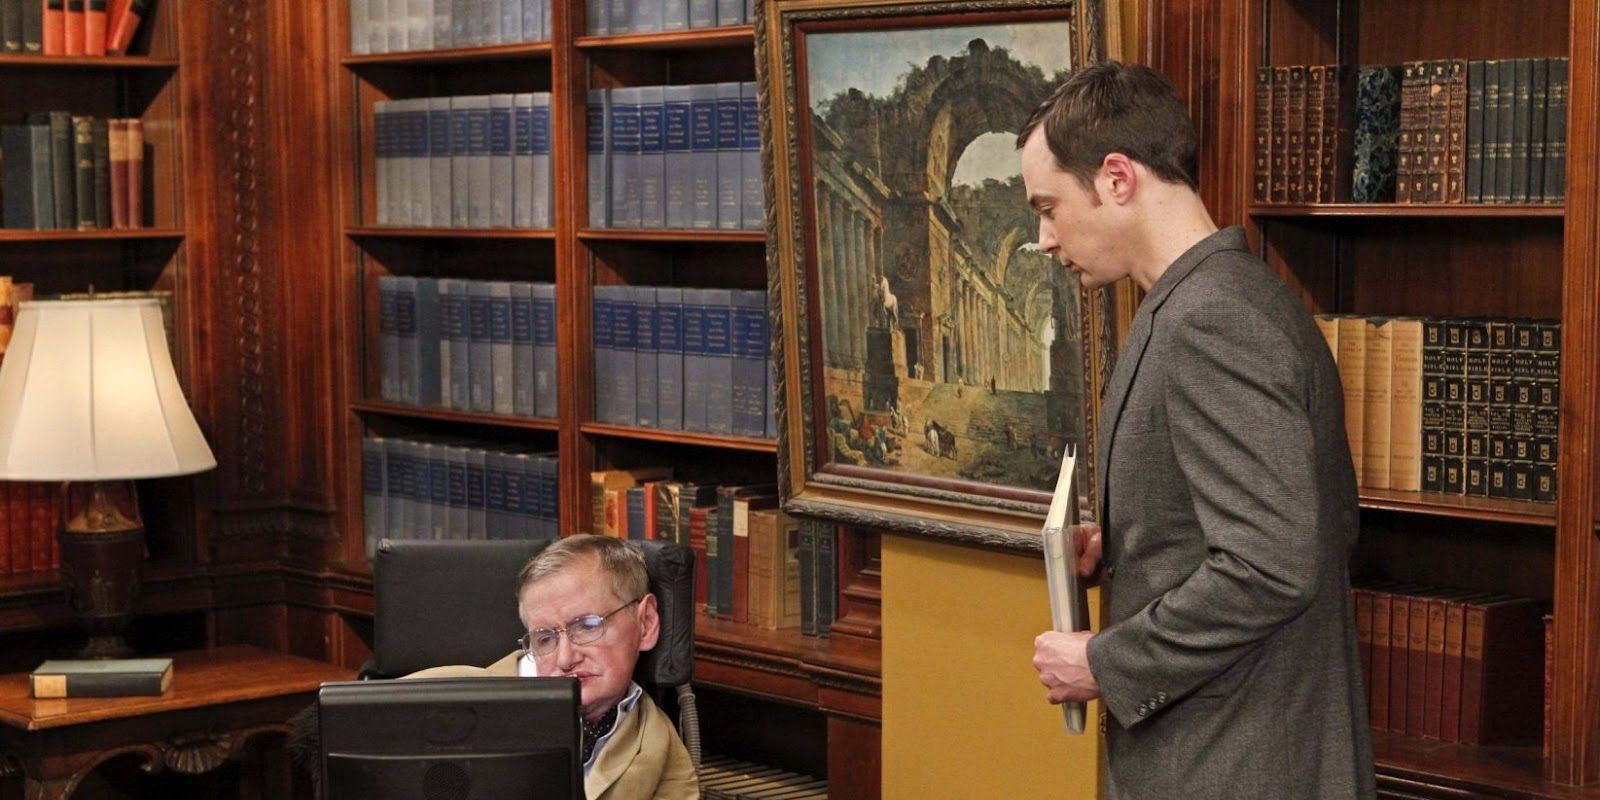 Stephen Hawking's cameo on The Big Bang Theory.